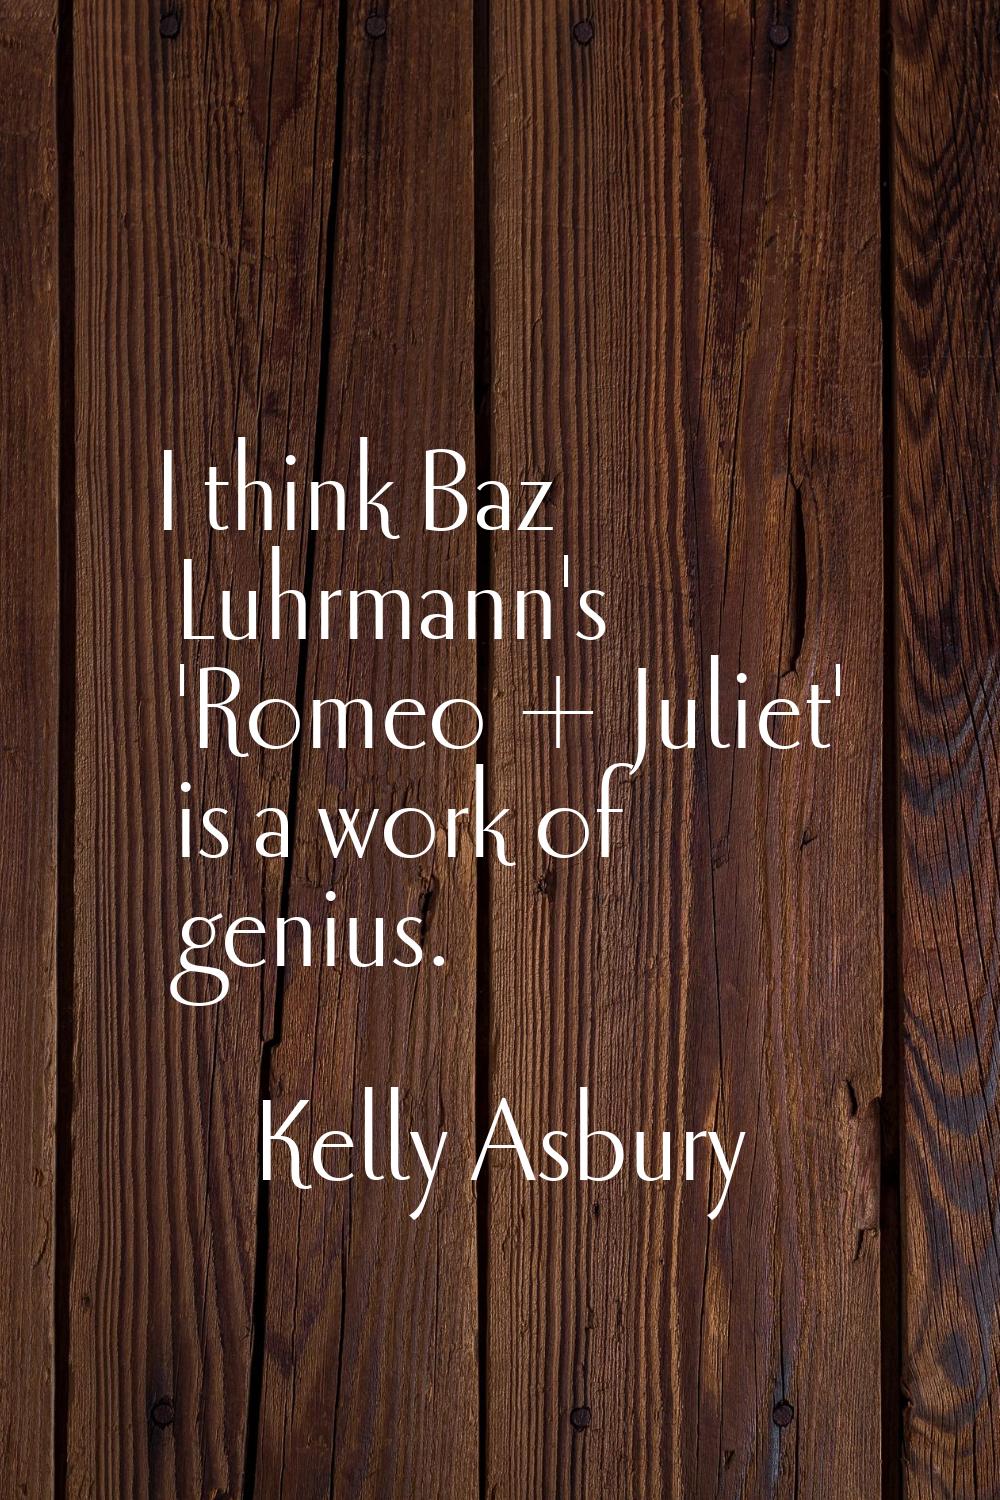 I think Baz Luhrmann's 'Romeo + Juliet' is a work of genius.